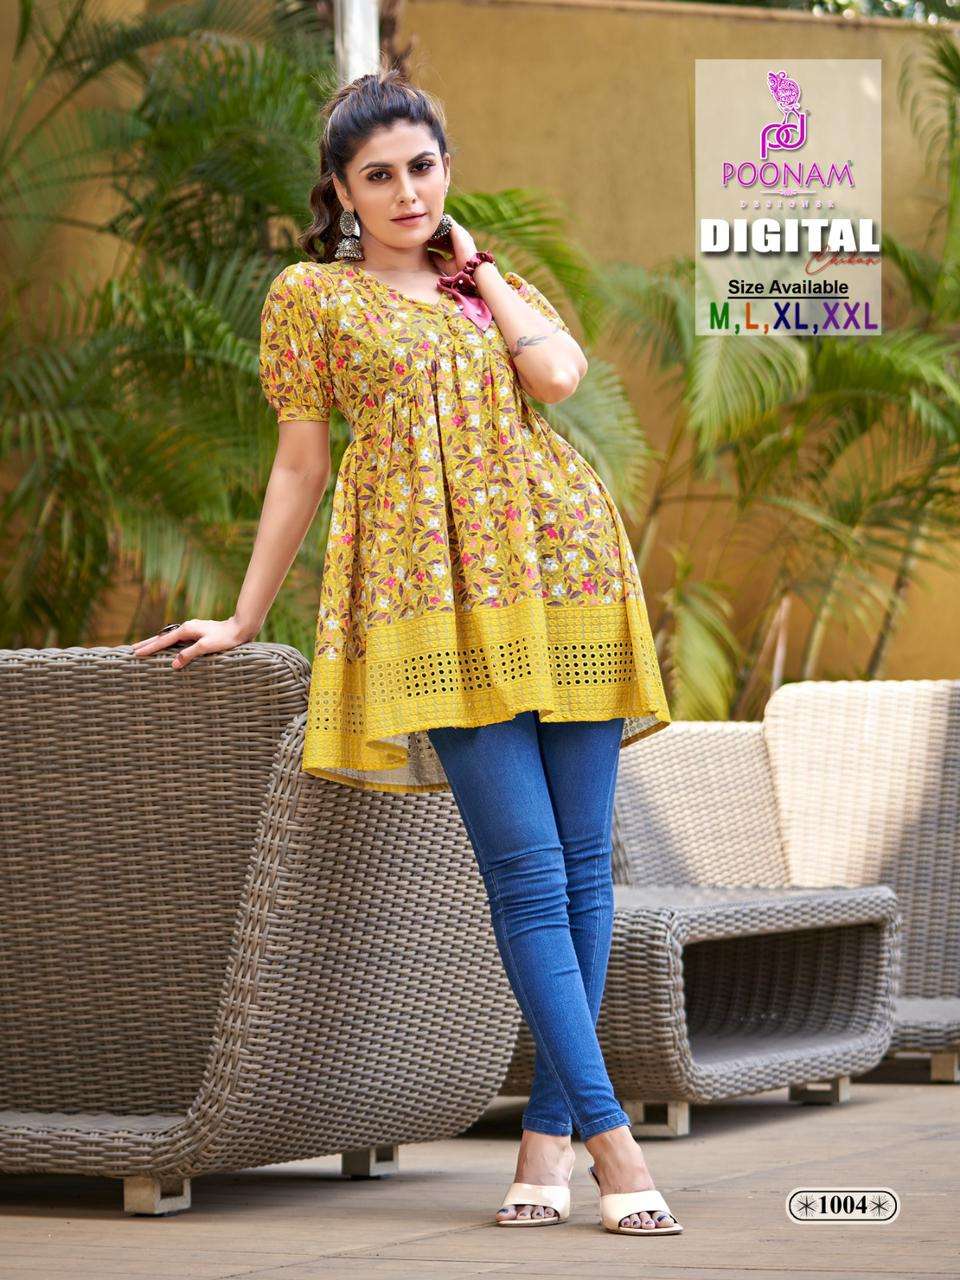 Poonam Designer Summer Special Launching Digital Chikan Tunic On Wholesale